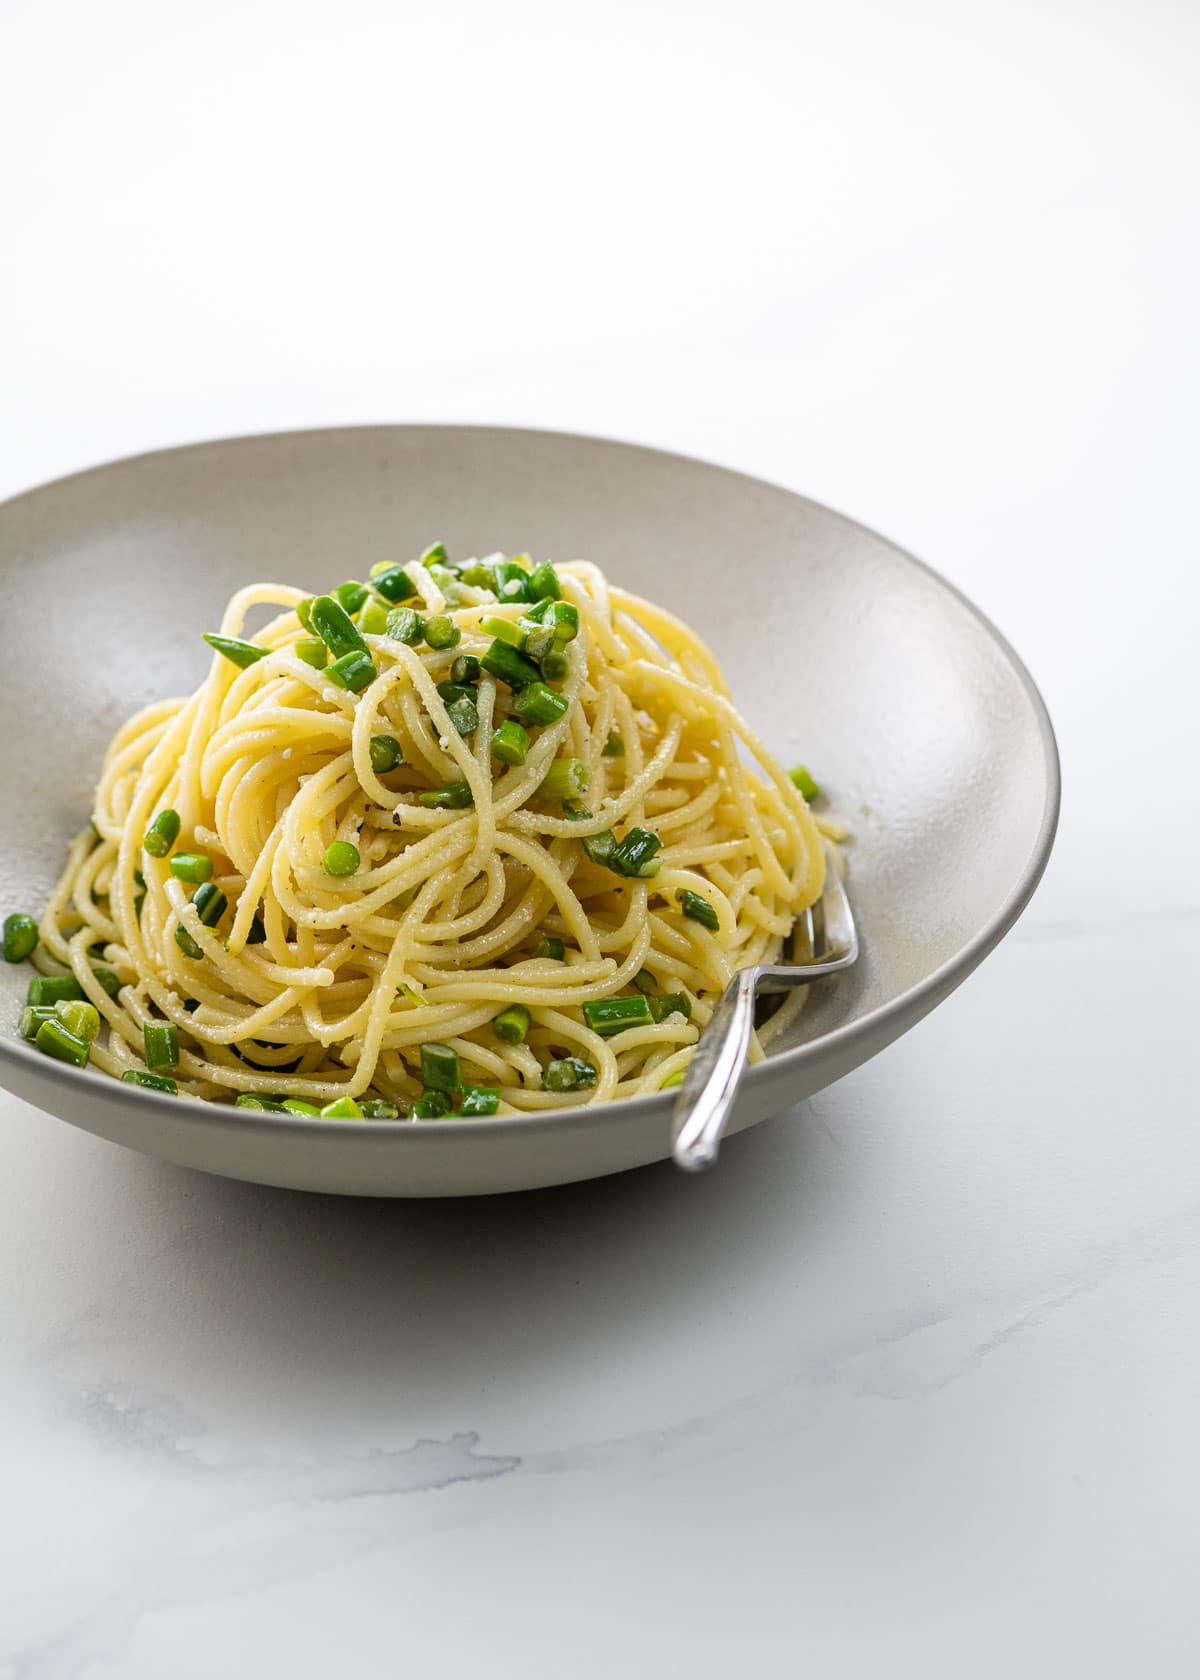 garlic scape pasta in a bowl